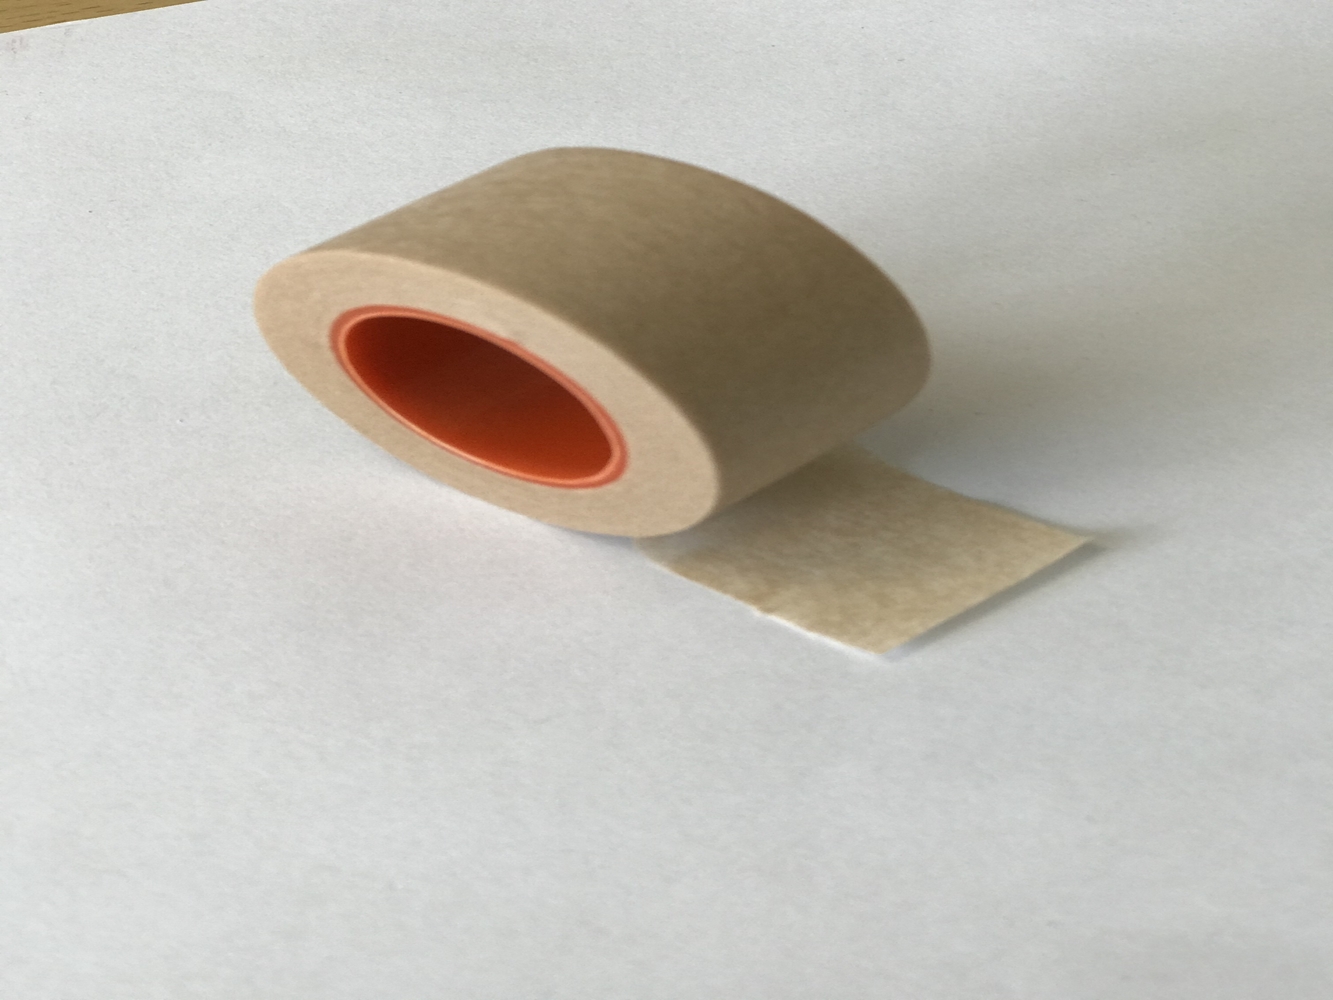 Häfta papper Scanpor beige - 2,5cmx10m  - 12 st/förp.